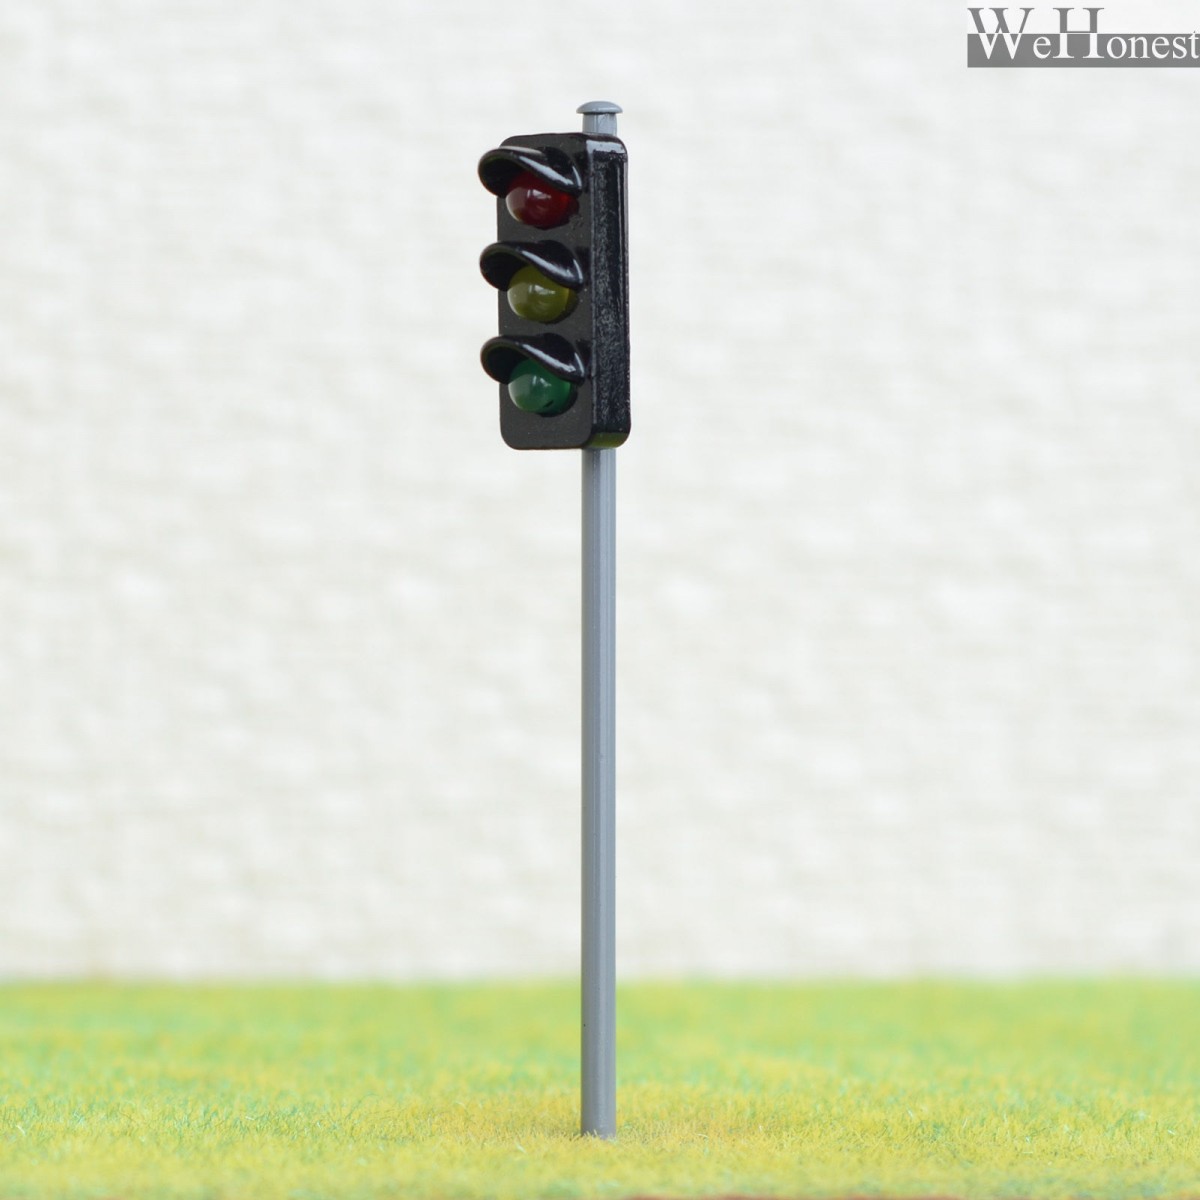 1 x  traffic  signal light O scale  model railroad crossing walk led lamp #GR3 (WeHonest)